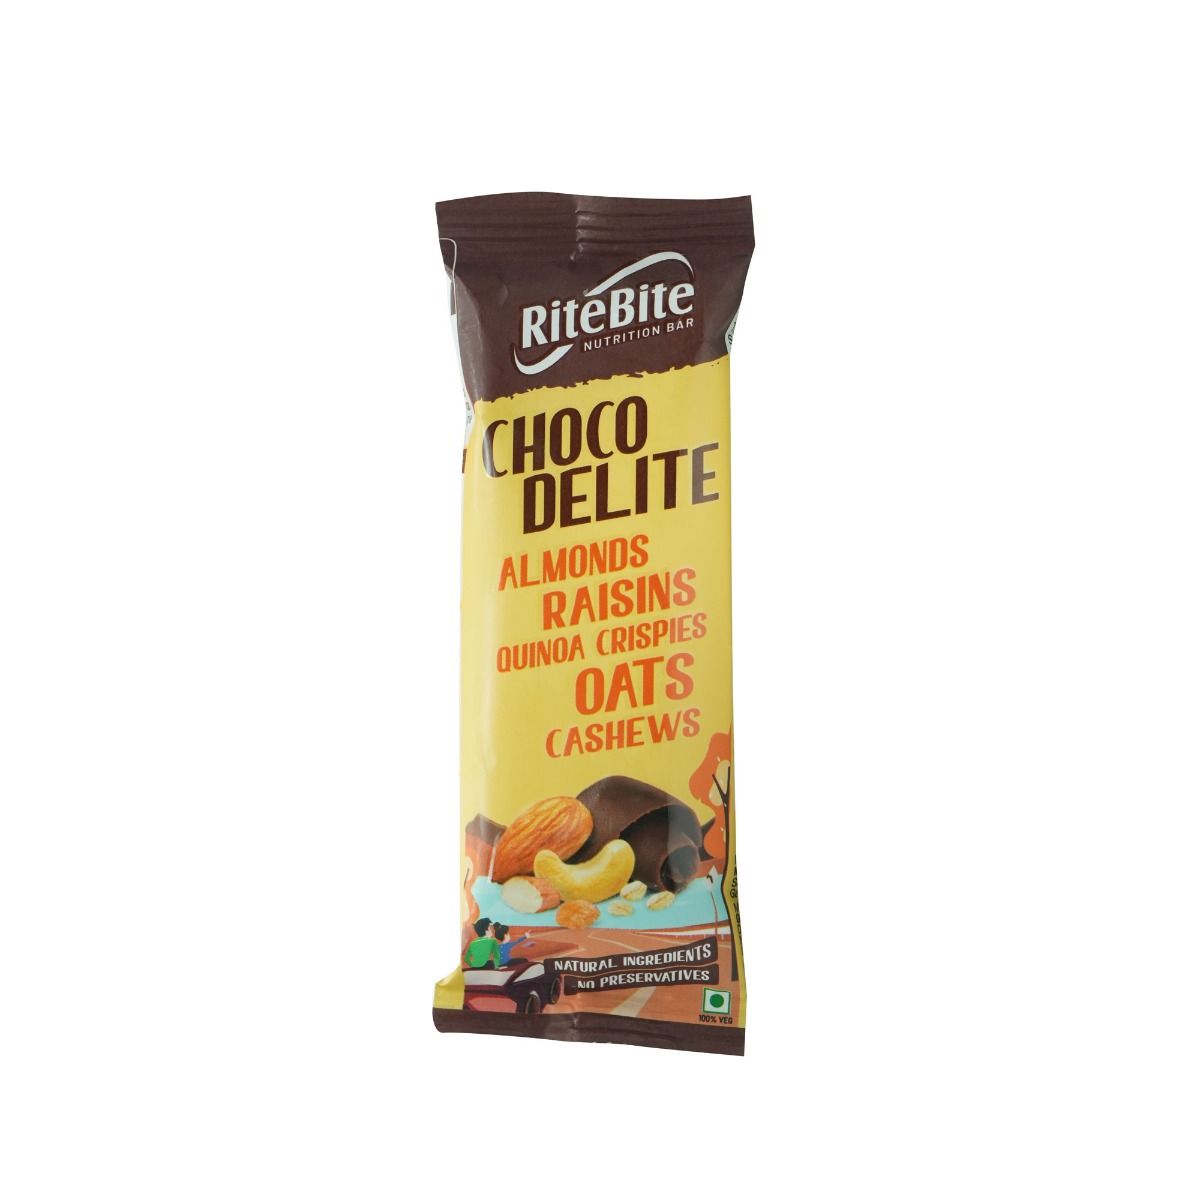 RiteBite Choco Delite Nutrition Bar, 40 gm, Pack of 1 